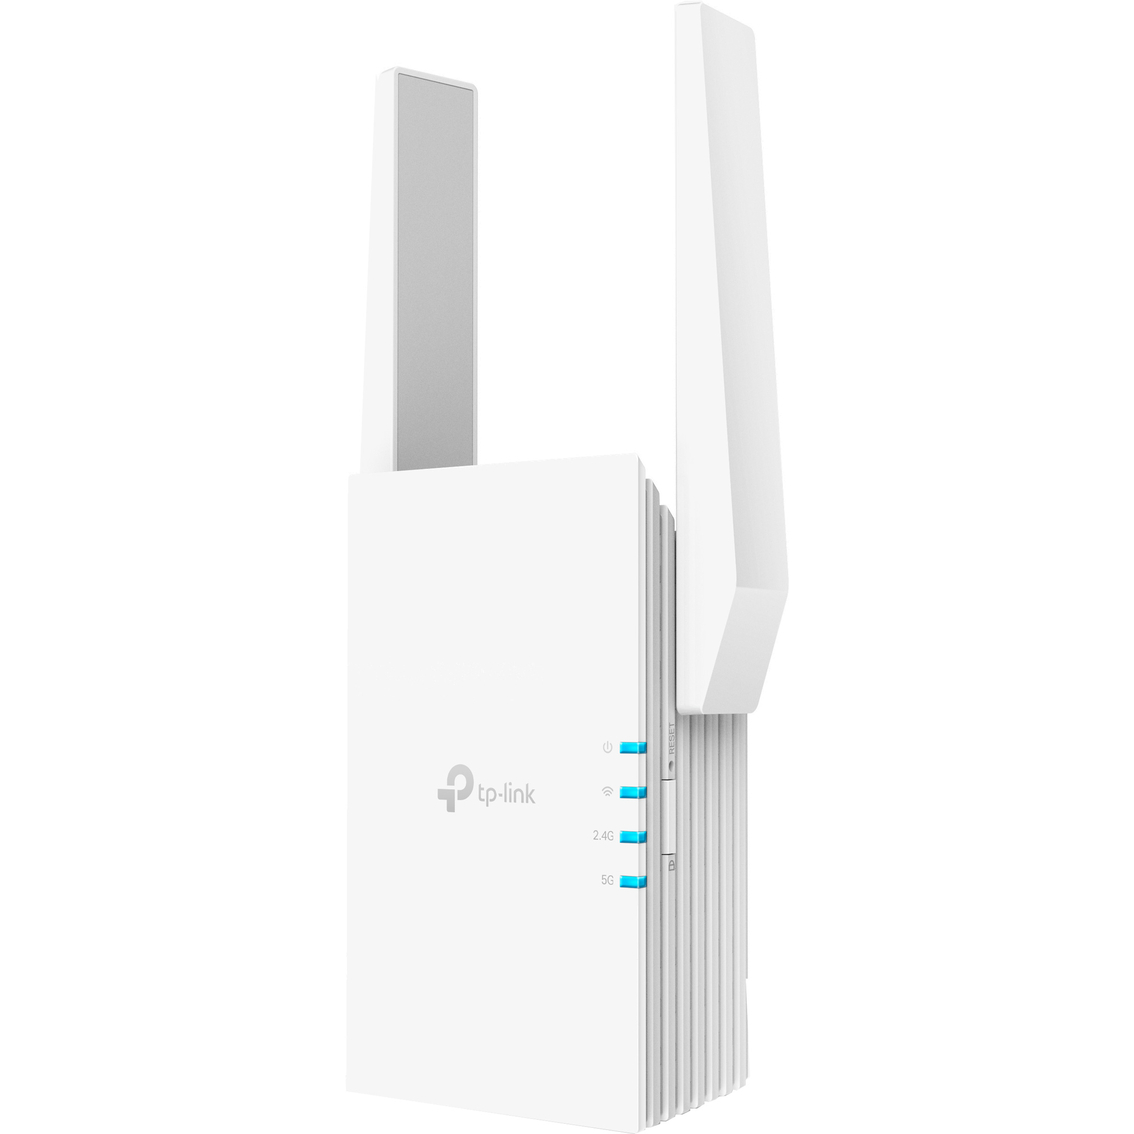 TP-Link AX1500 Wi-Fi 6 Range Extender - Image 2 of 3